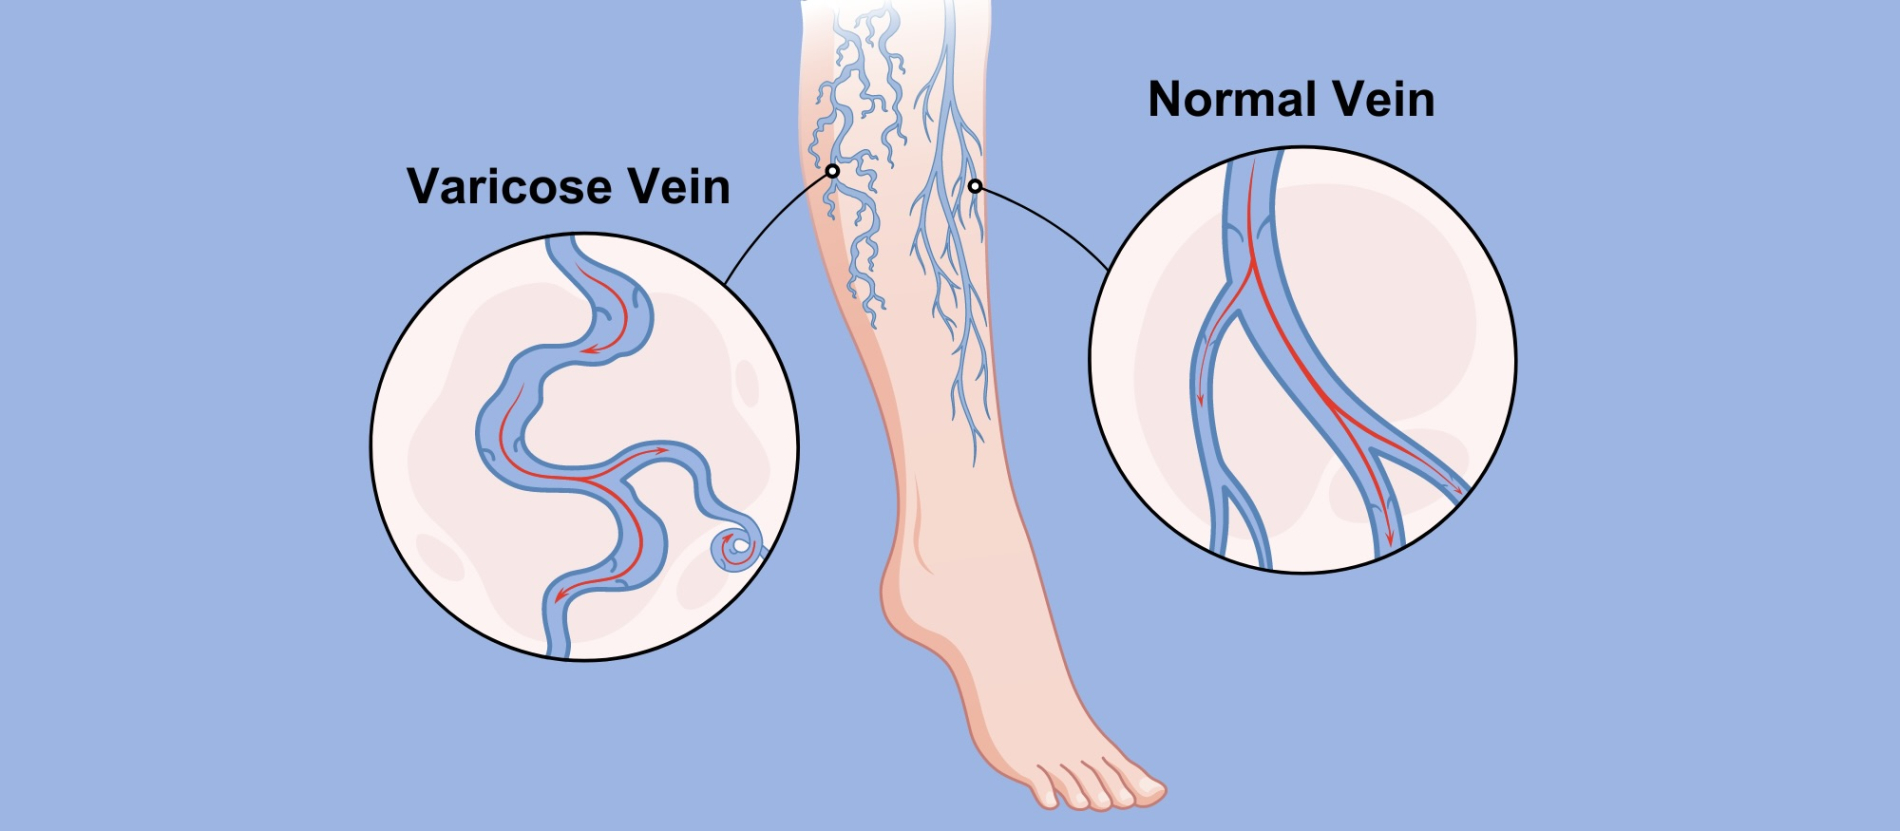 Cartoon drawing comparing normal versus varicose veins.